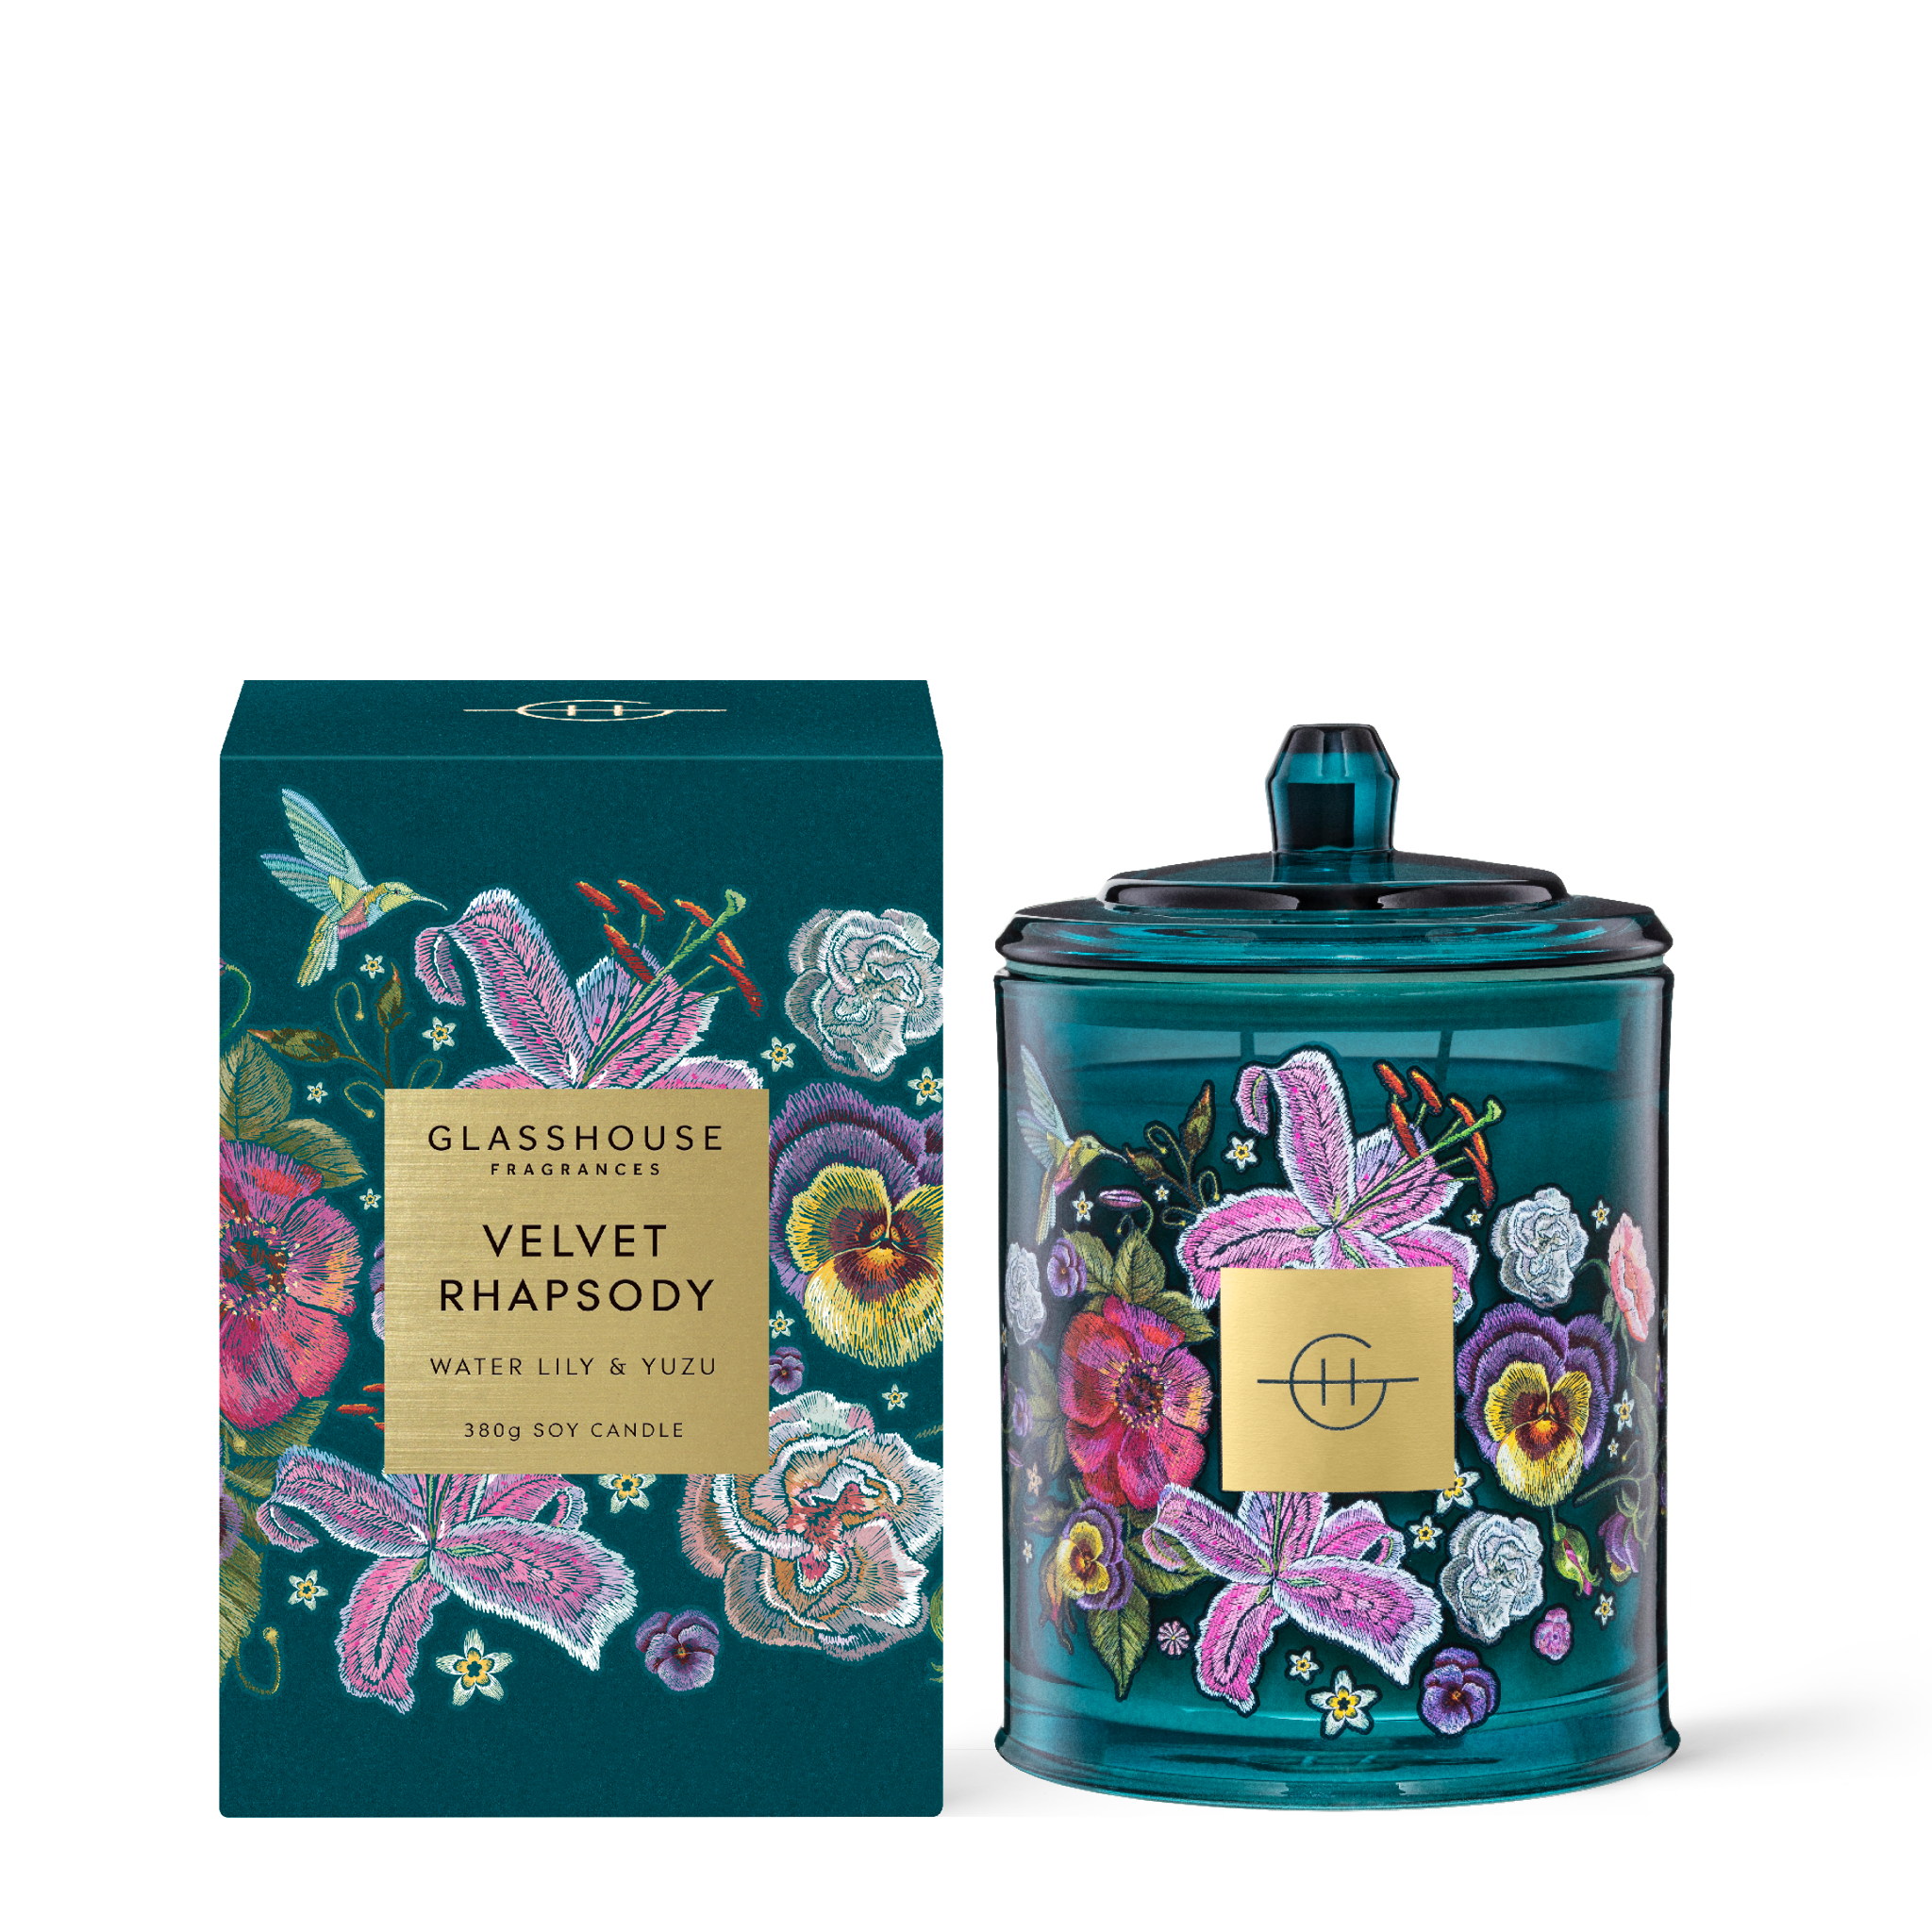 Glasshouse Fragrances Velvet Rhapsody Water Lily & Yuzu 380g Soy Candle with box